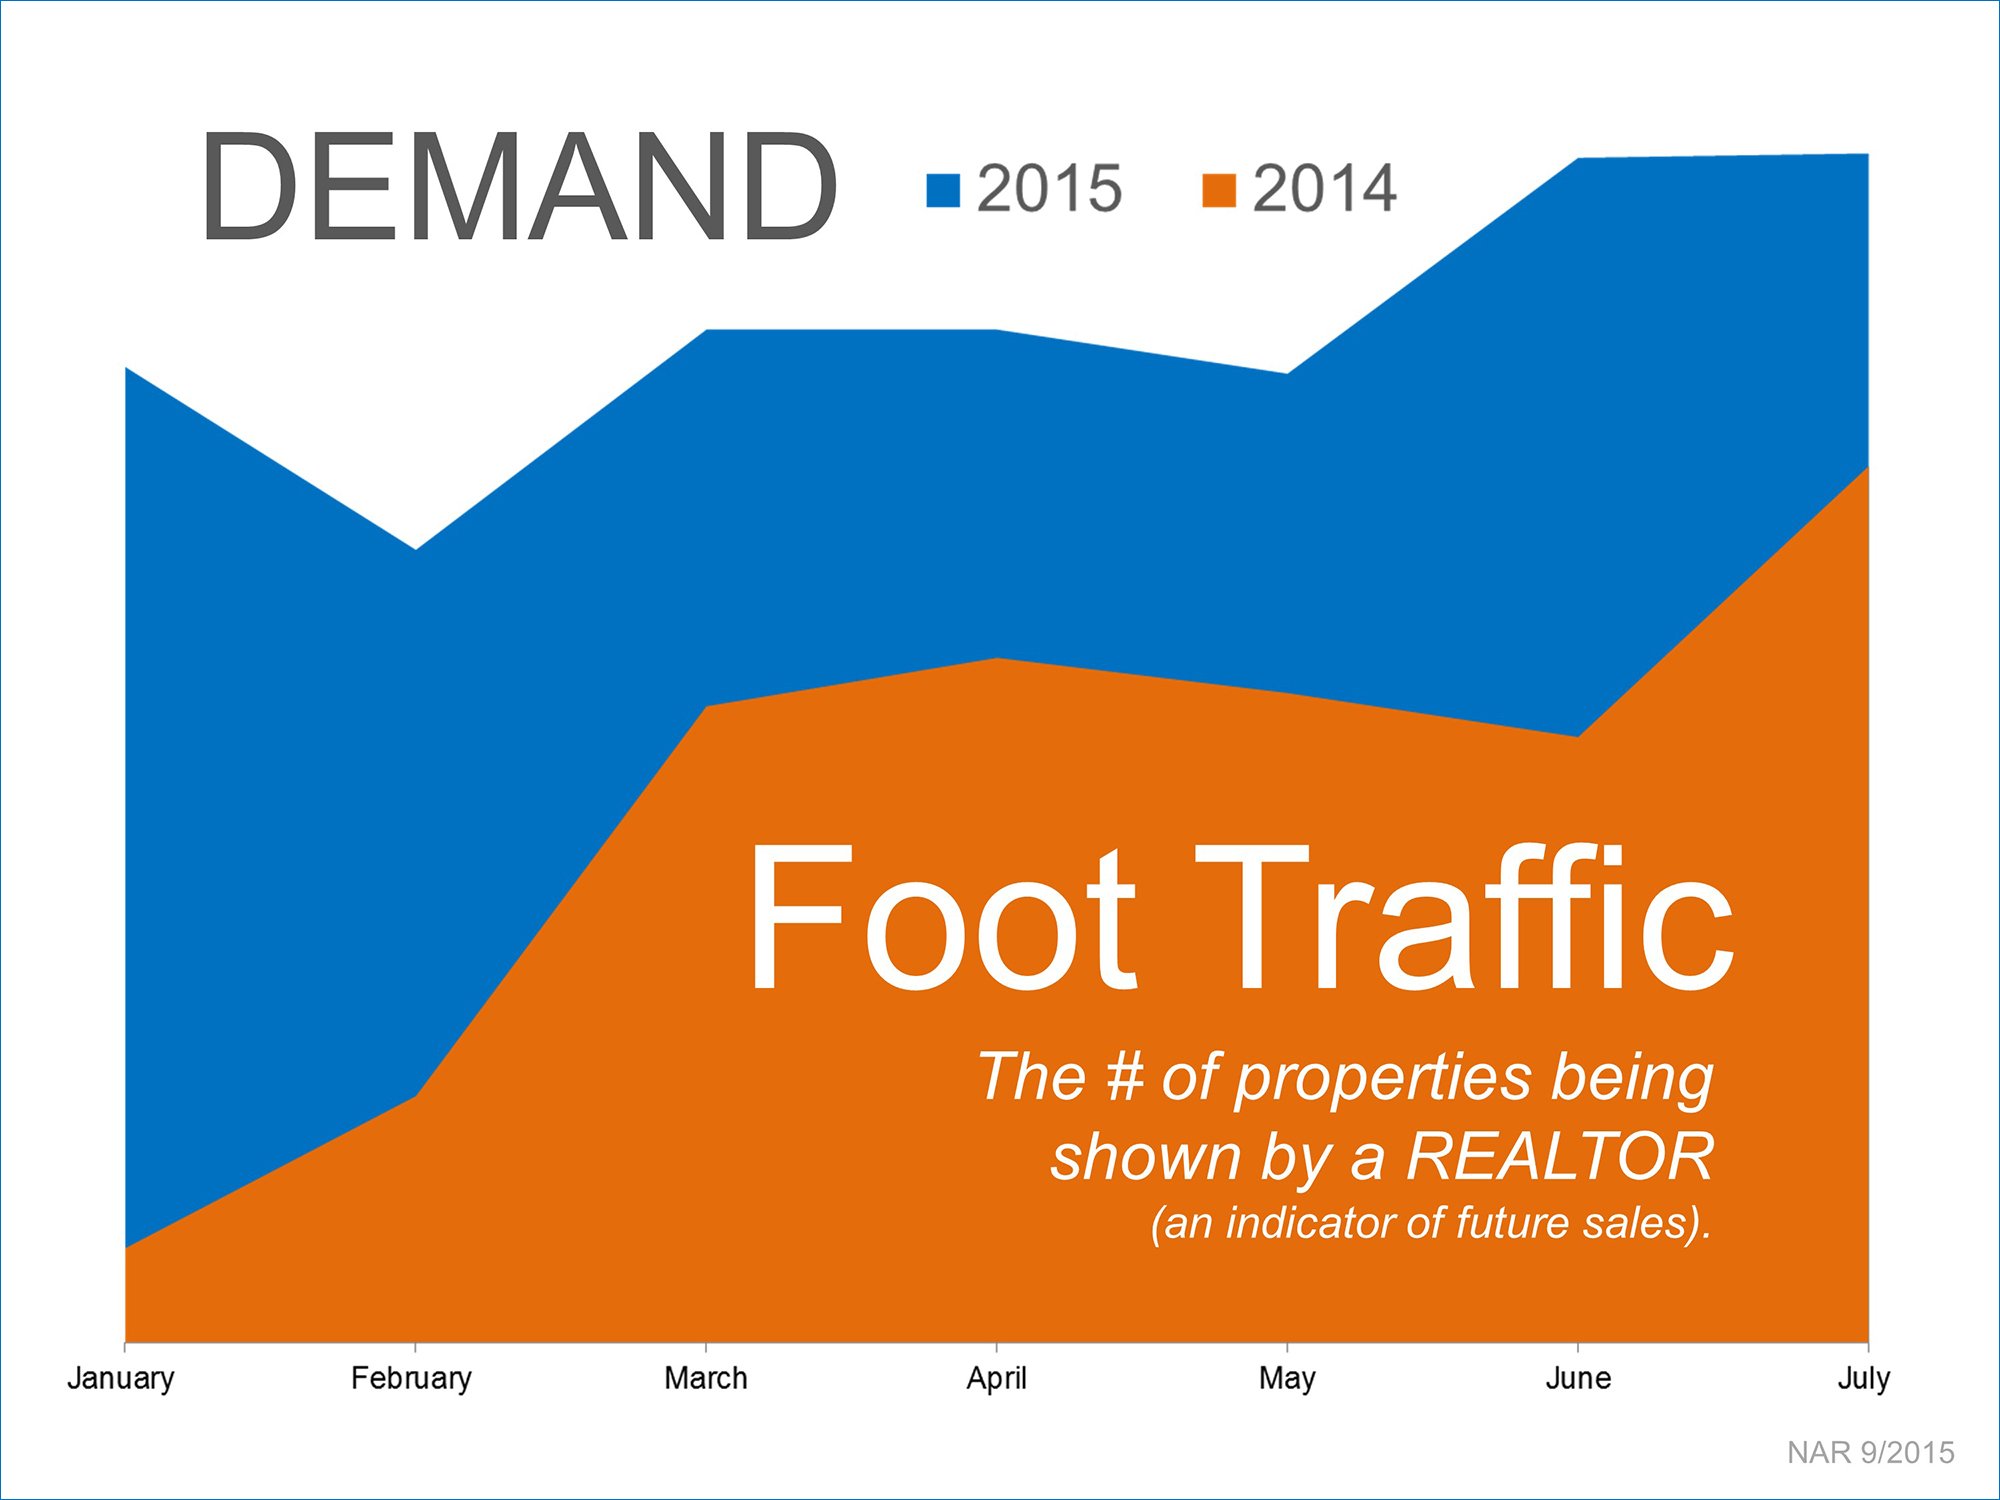 Foot Traffic | Simplifying The Market